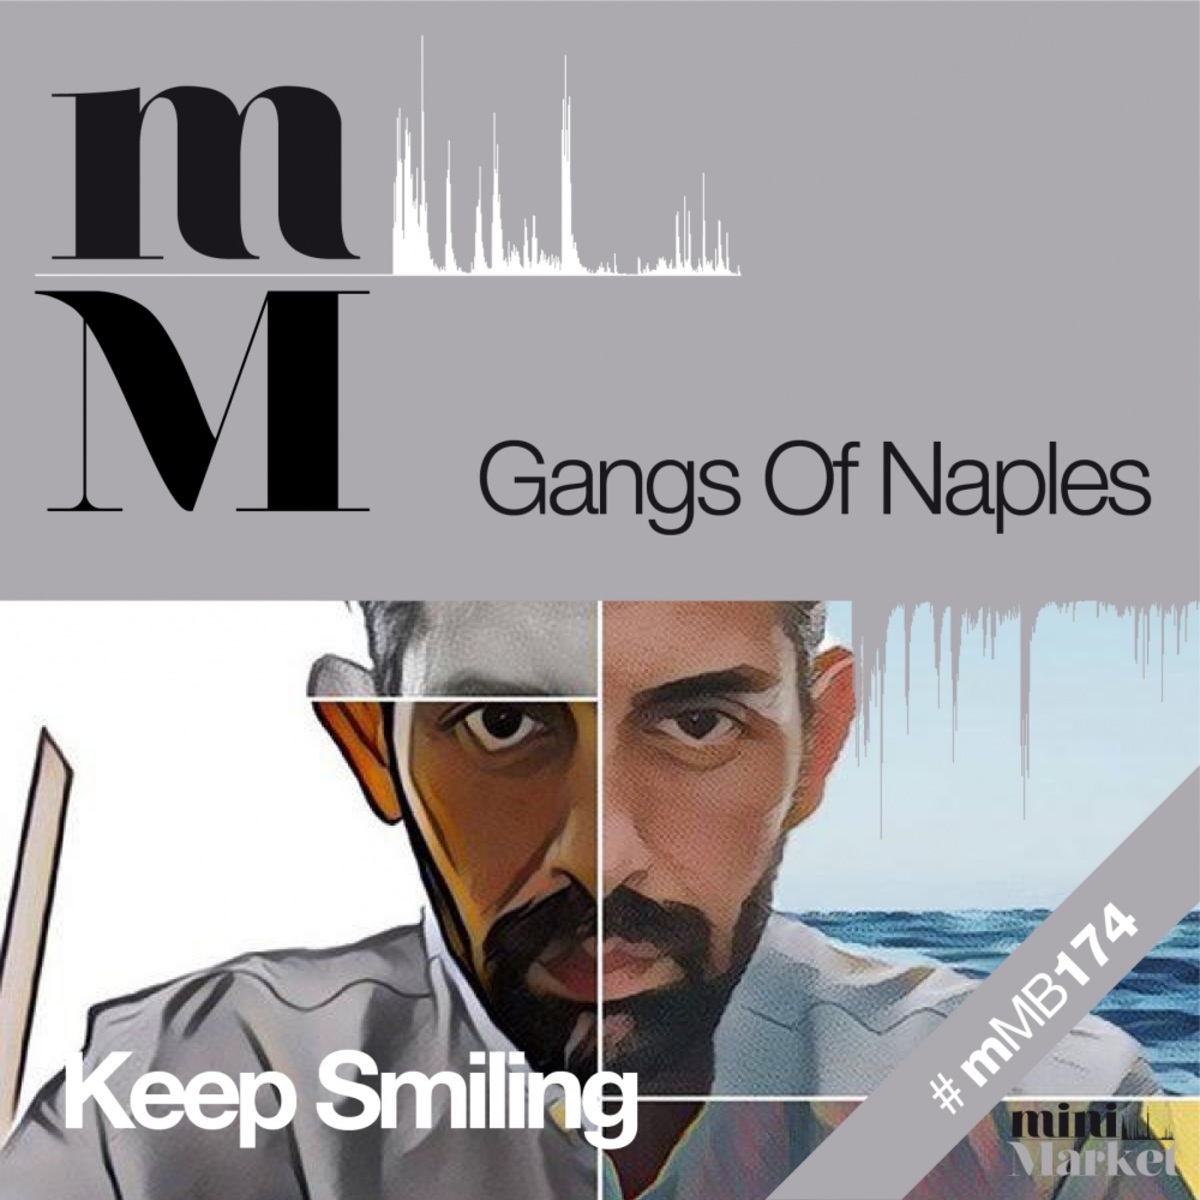 Gangs of Napels - Keep Smilling / miniMarket